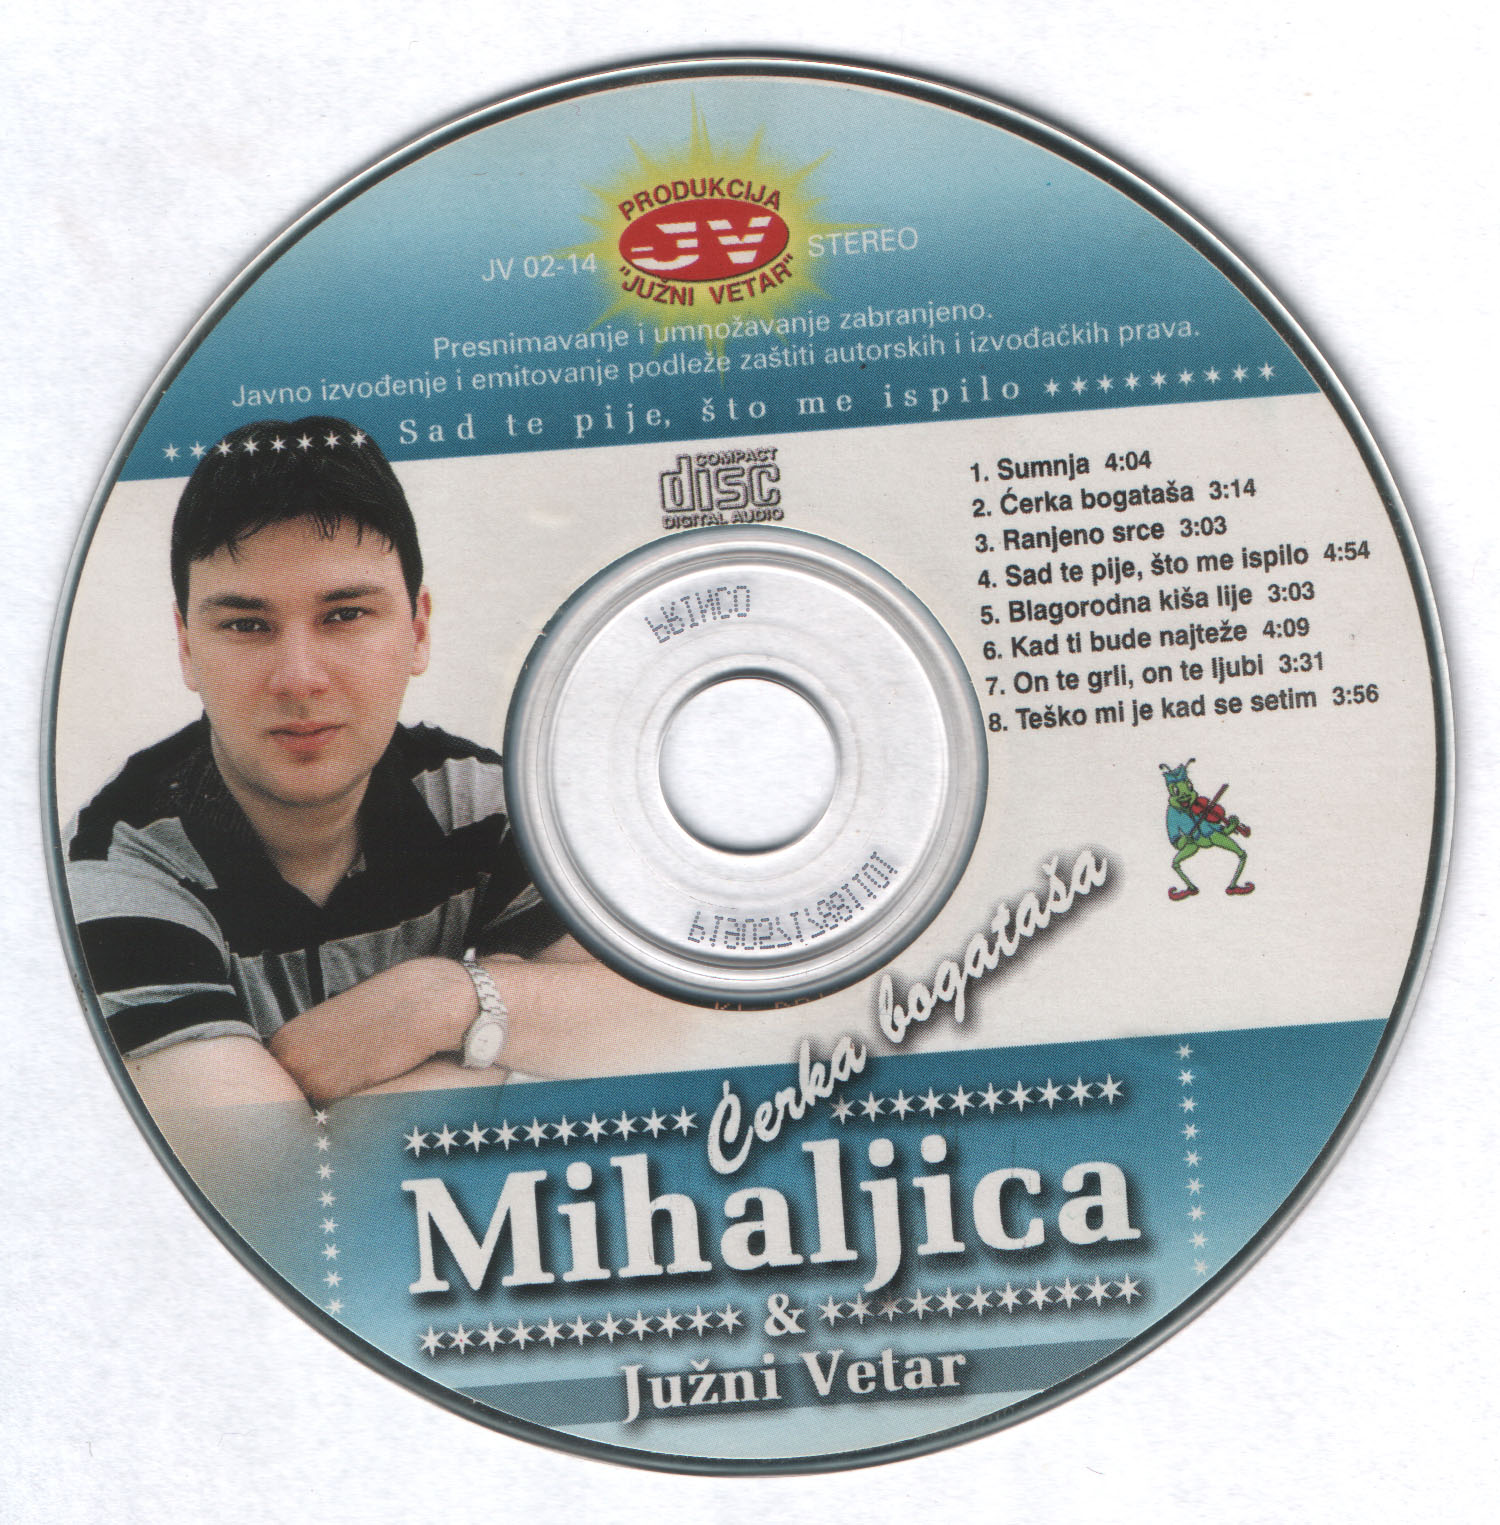 Jovan Mihaljica 2002 Cd